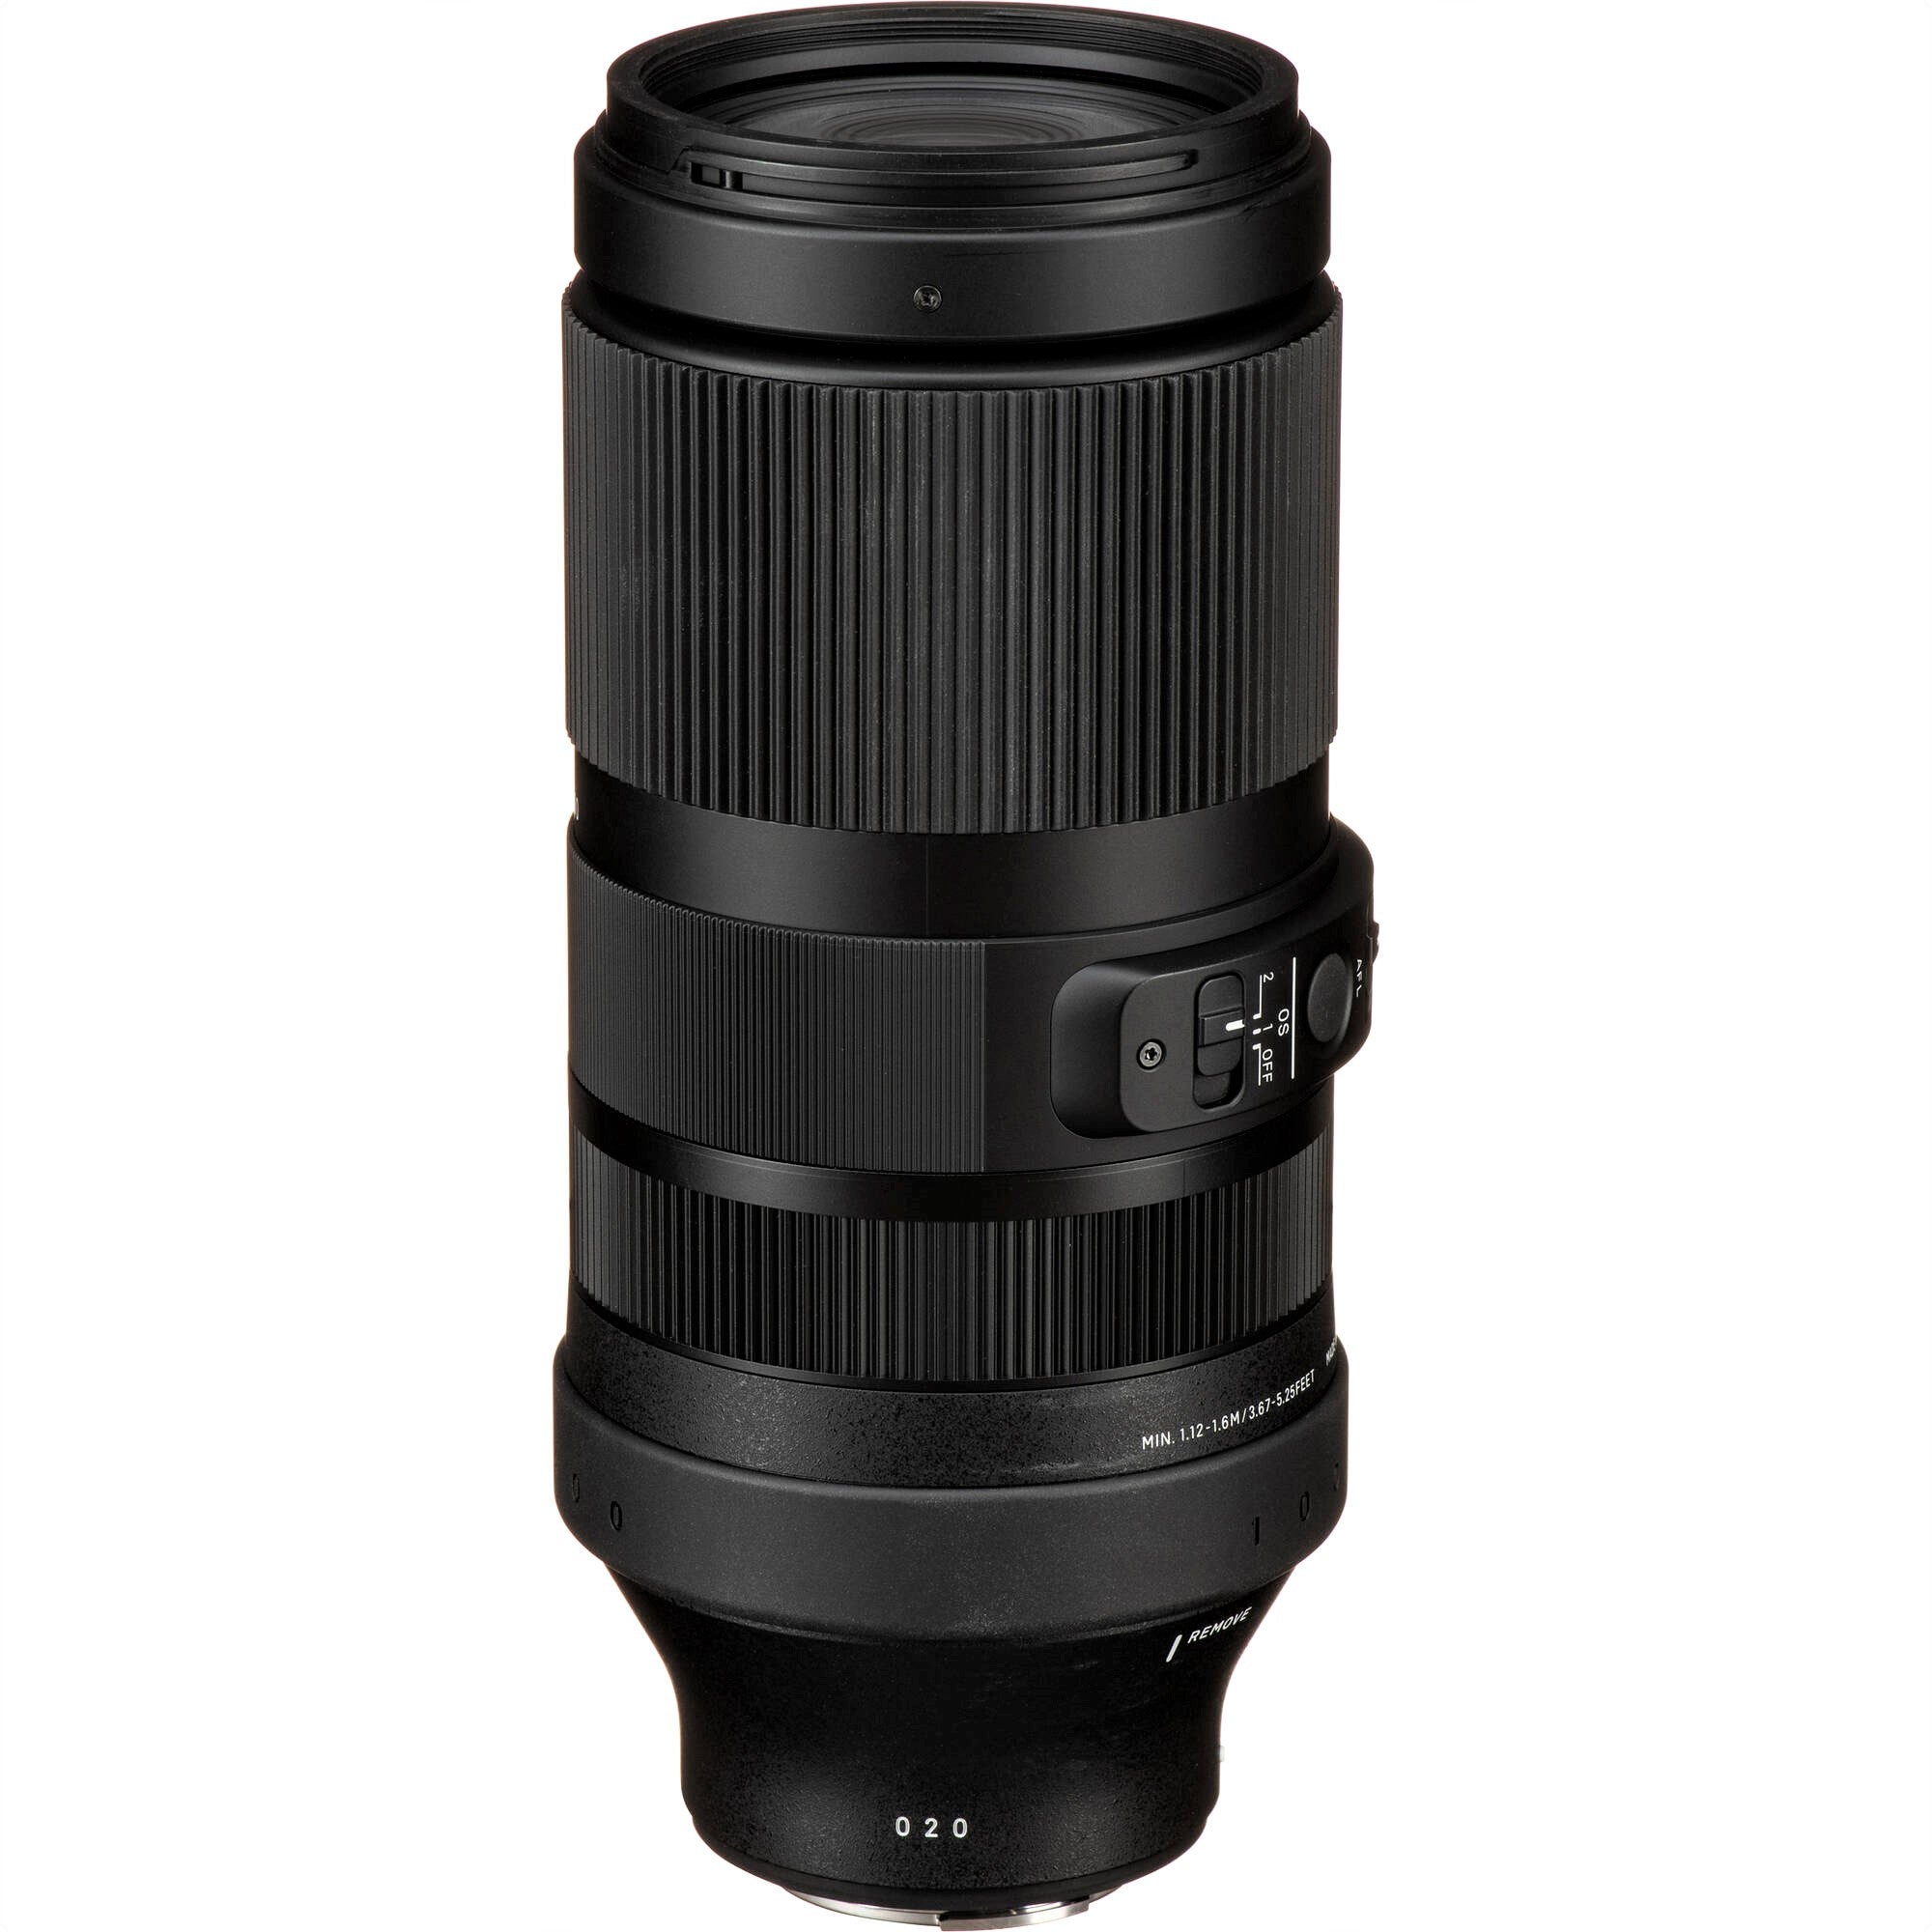 Sigma 100-400mm F5-6.3 DG DN OS Contemporary Lens